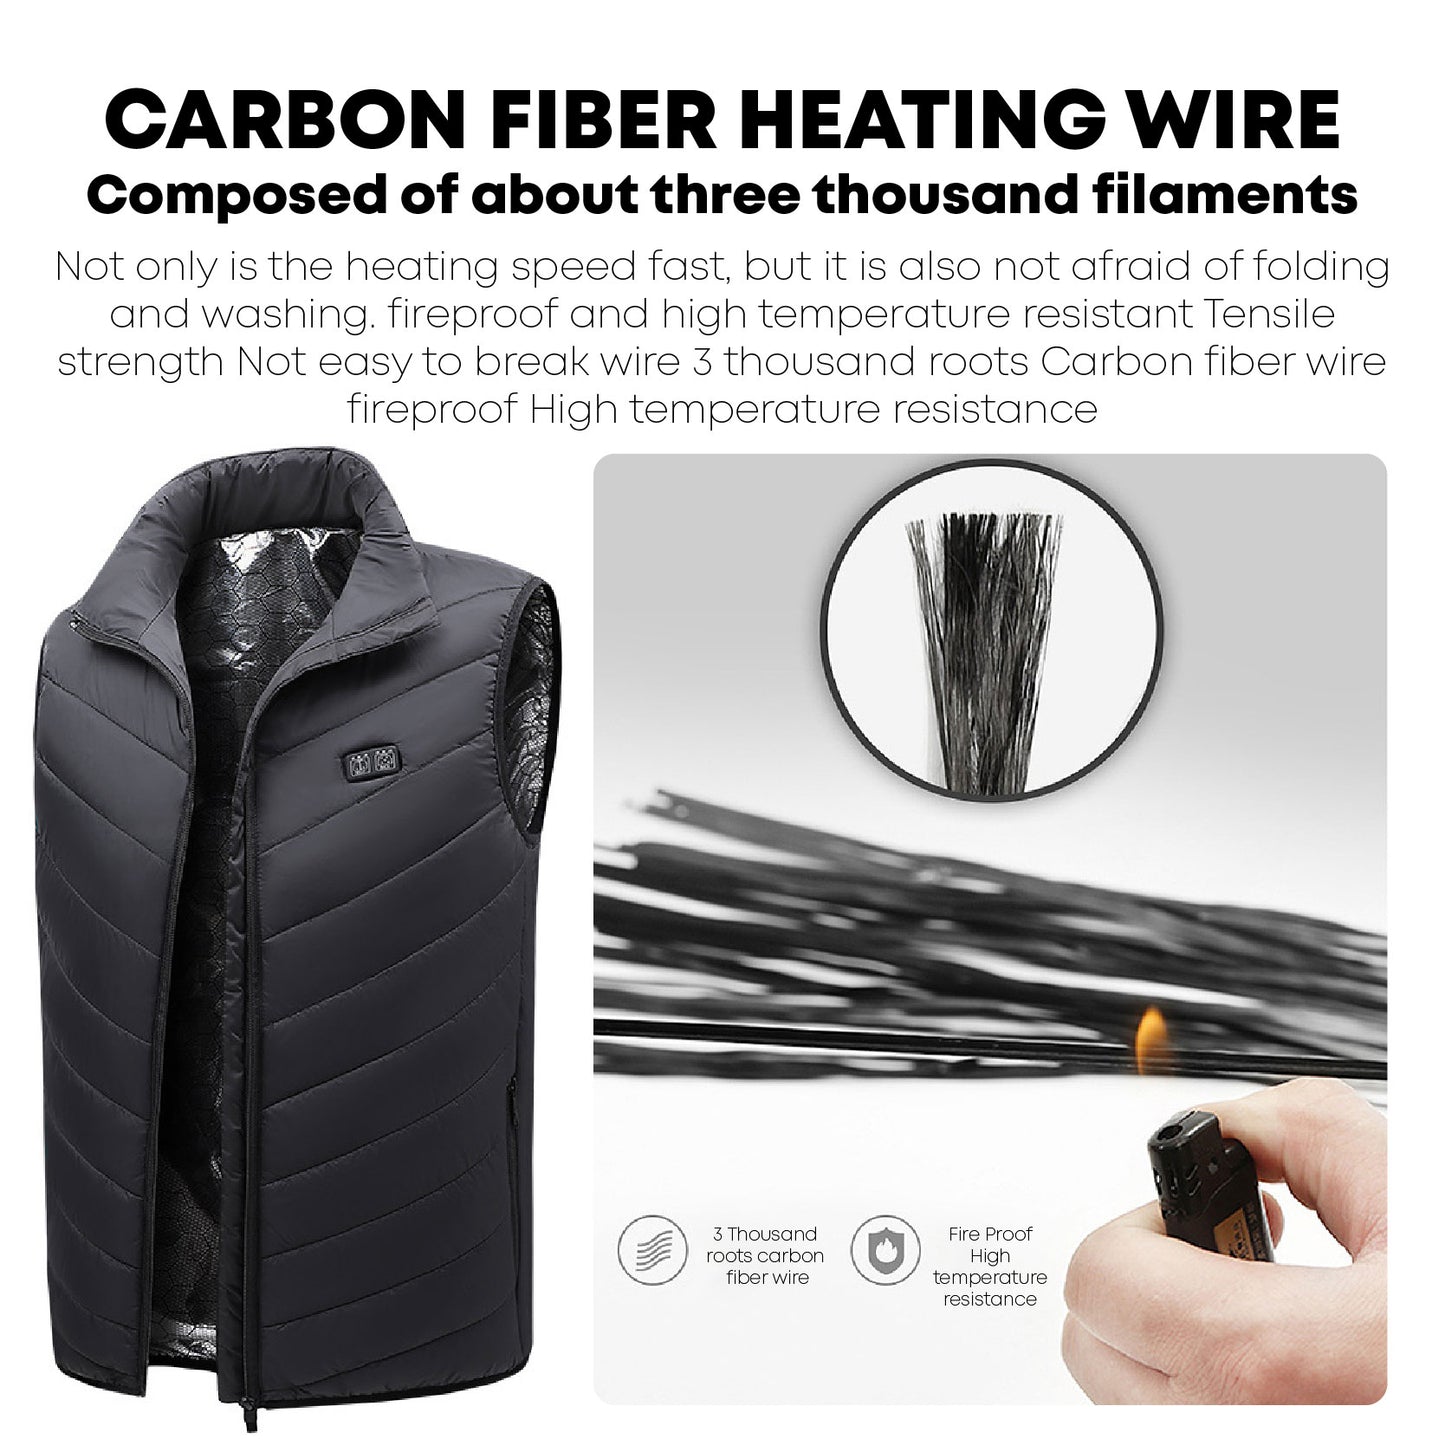 Innovative Electric Heated Vest